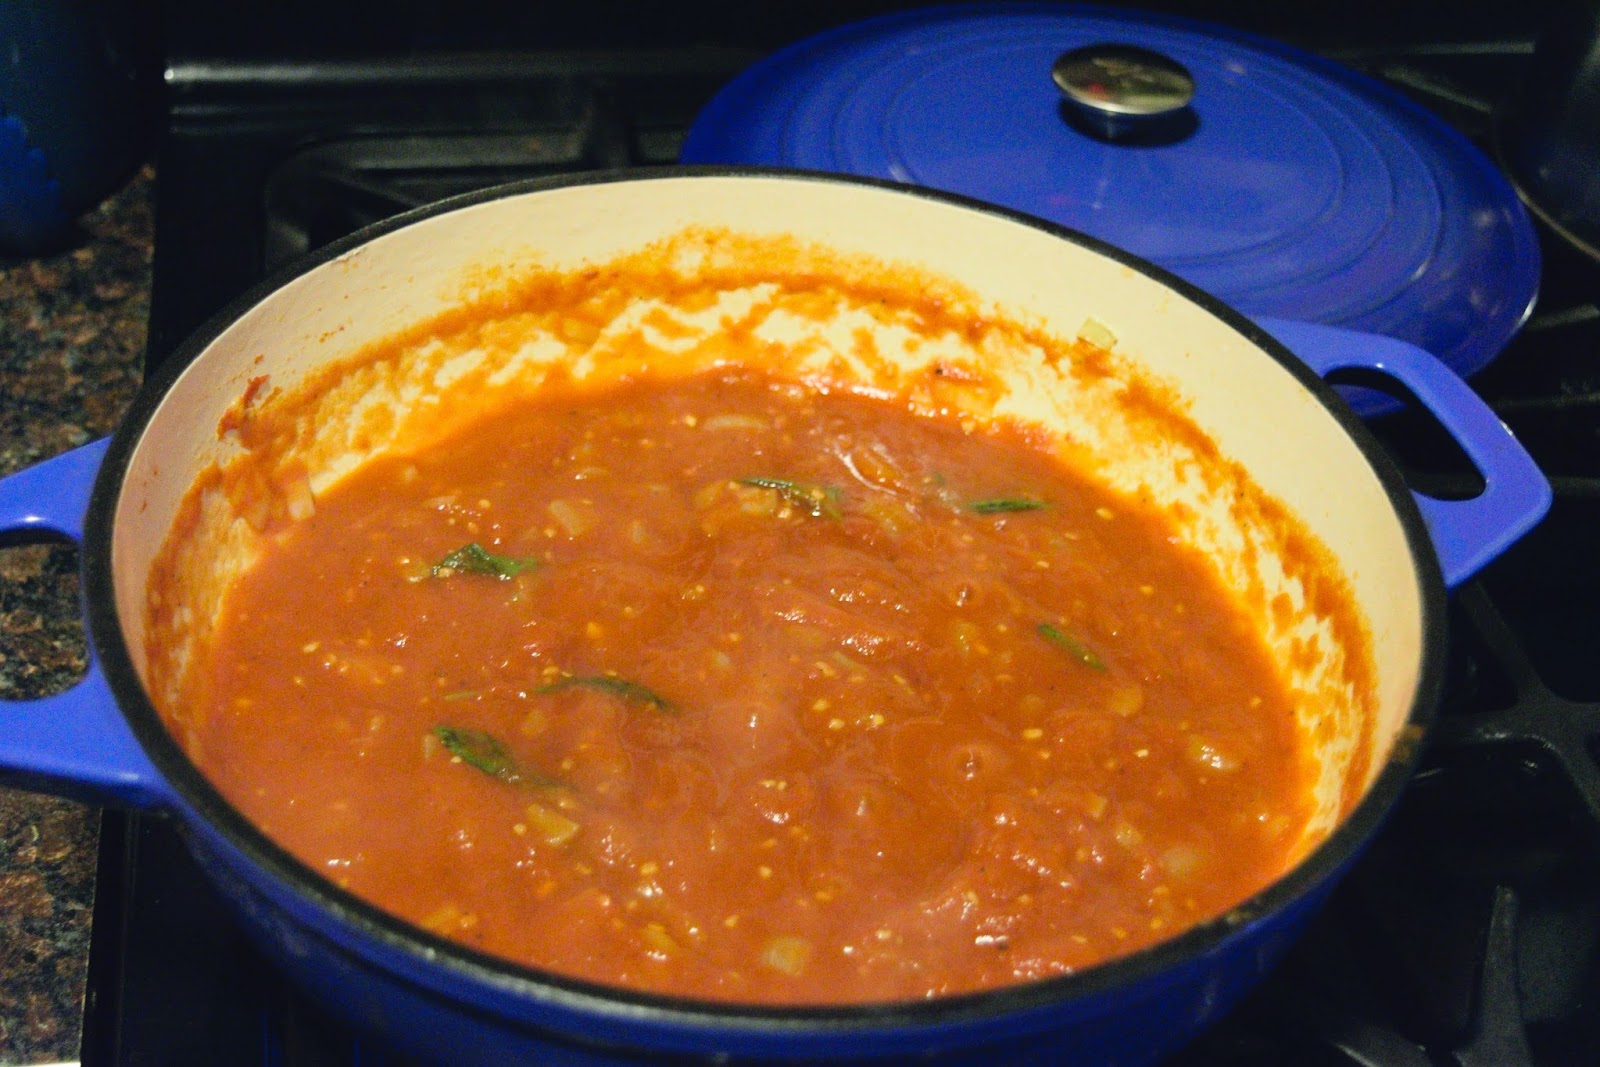 The marinara simmering in the sauce pot. 